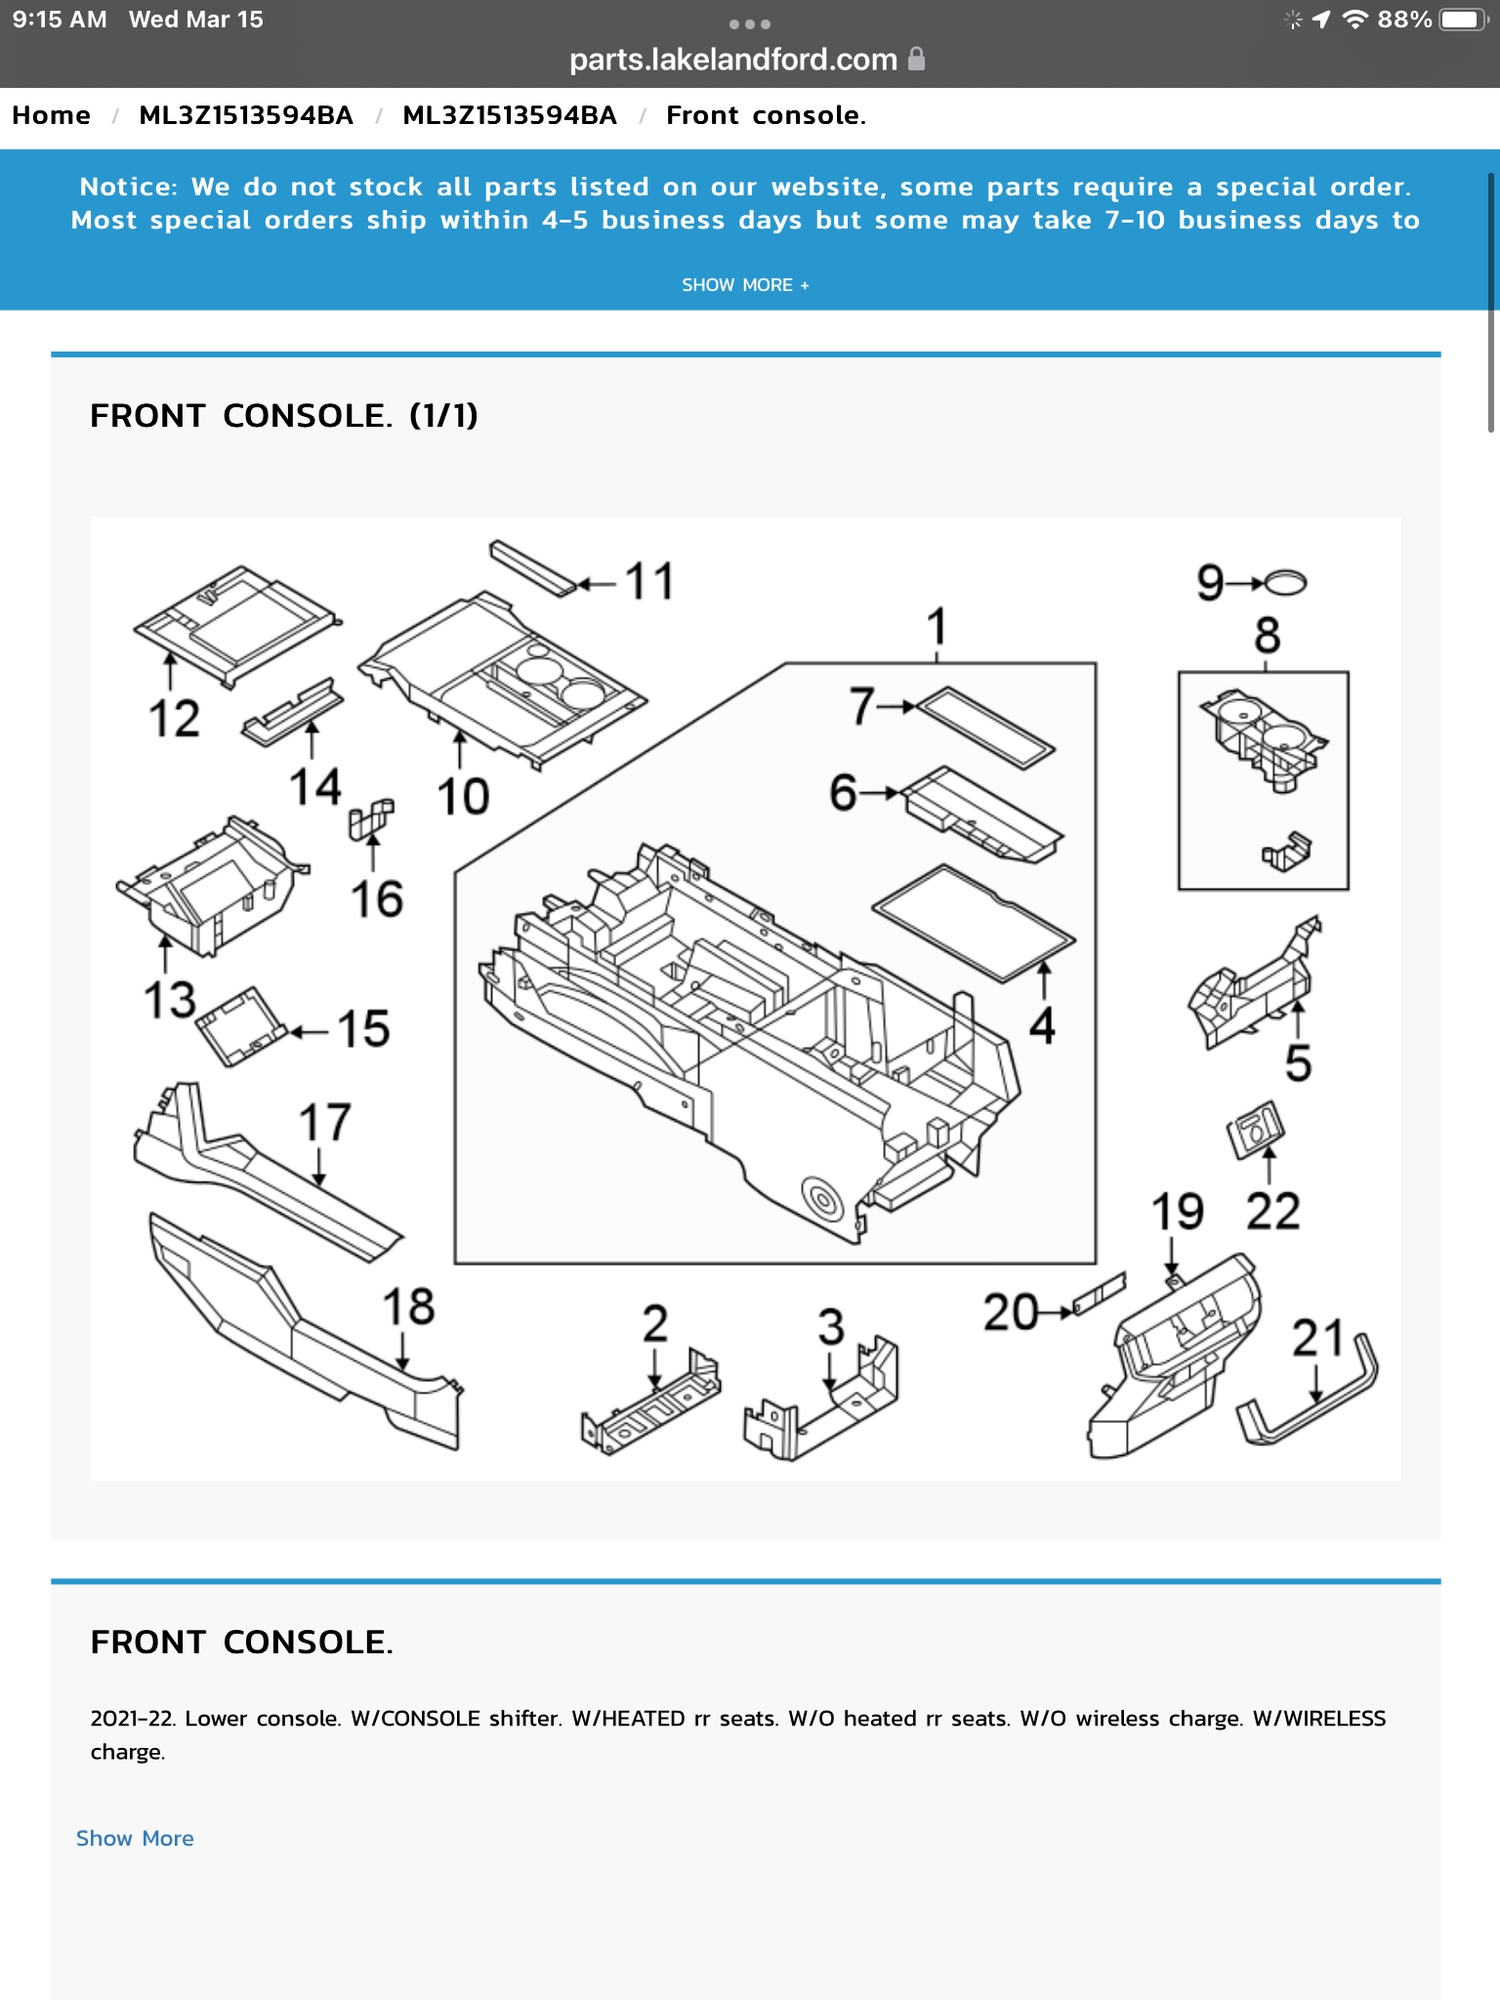 Interior Parts Diagrams Ford F150